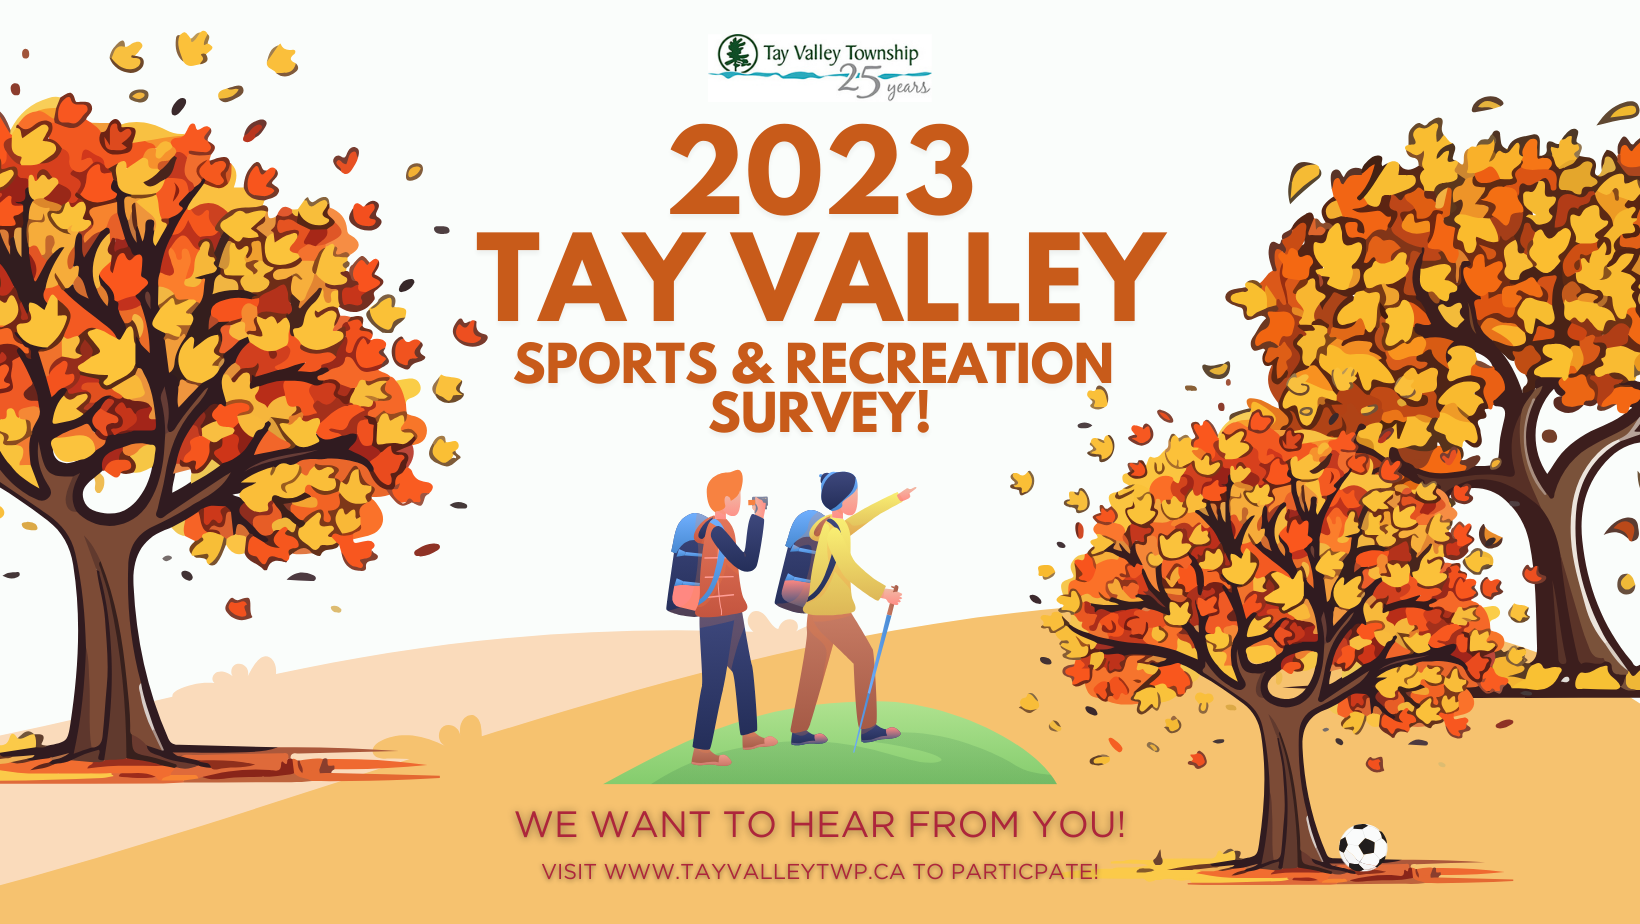 Sports & Recreation Survey 2023 